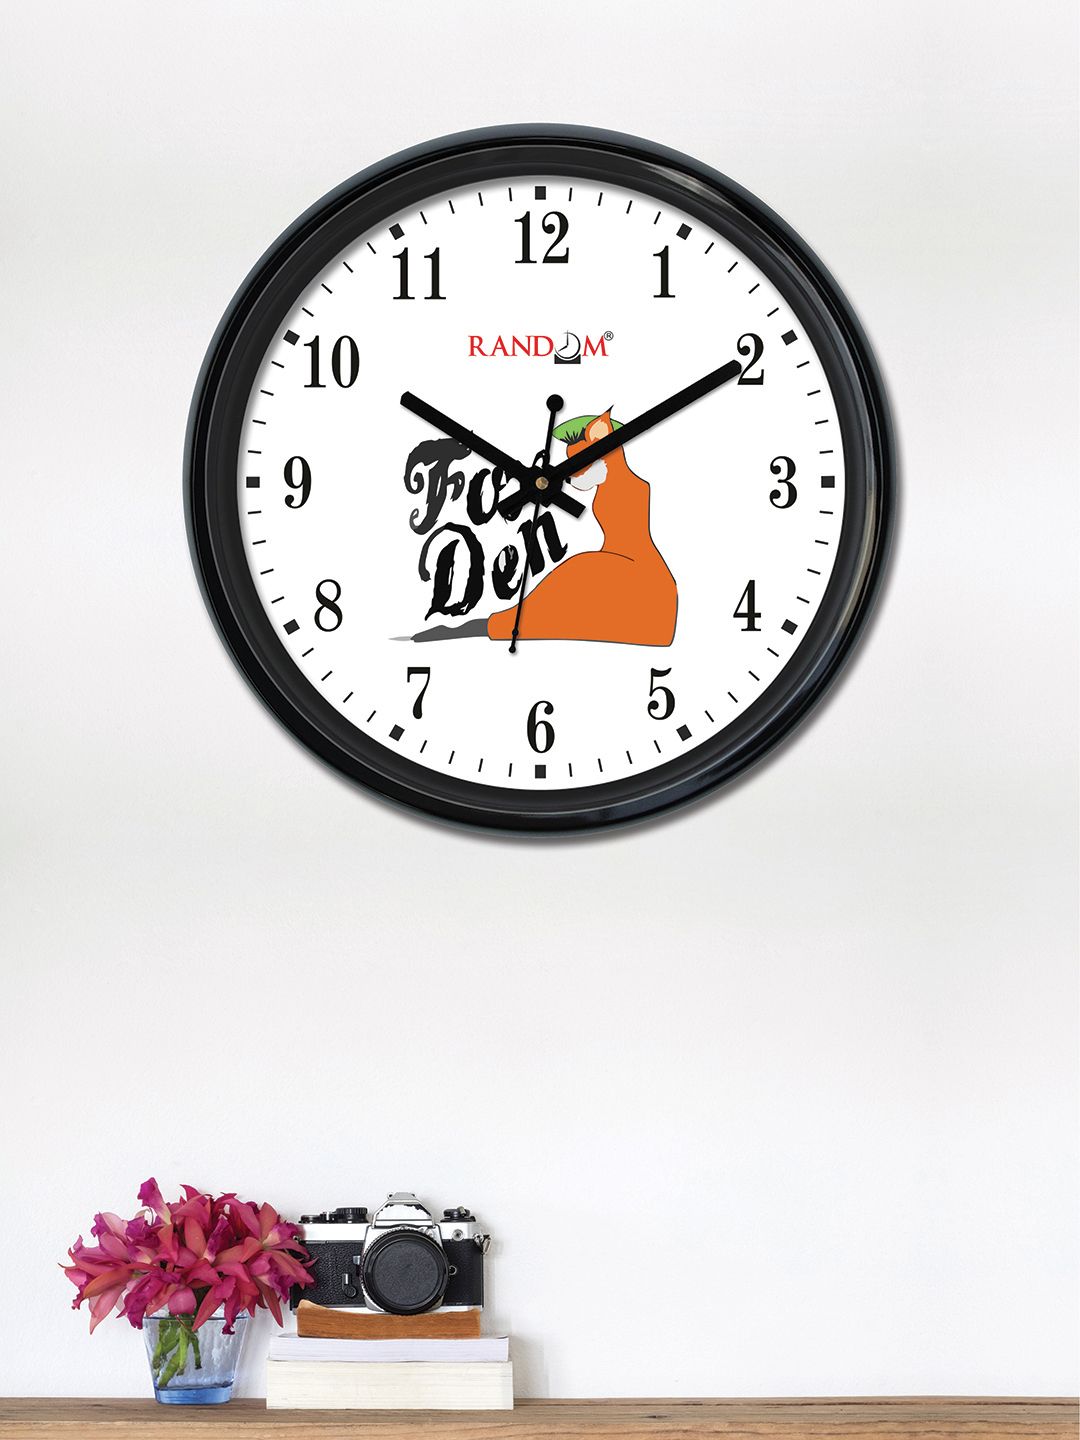 RANDOM White & Orange Round Printed 30 x 30 cm Analogue Wall Clock Price in India